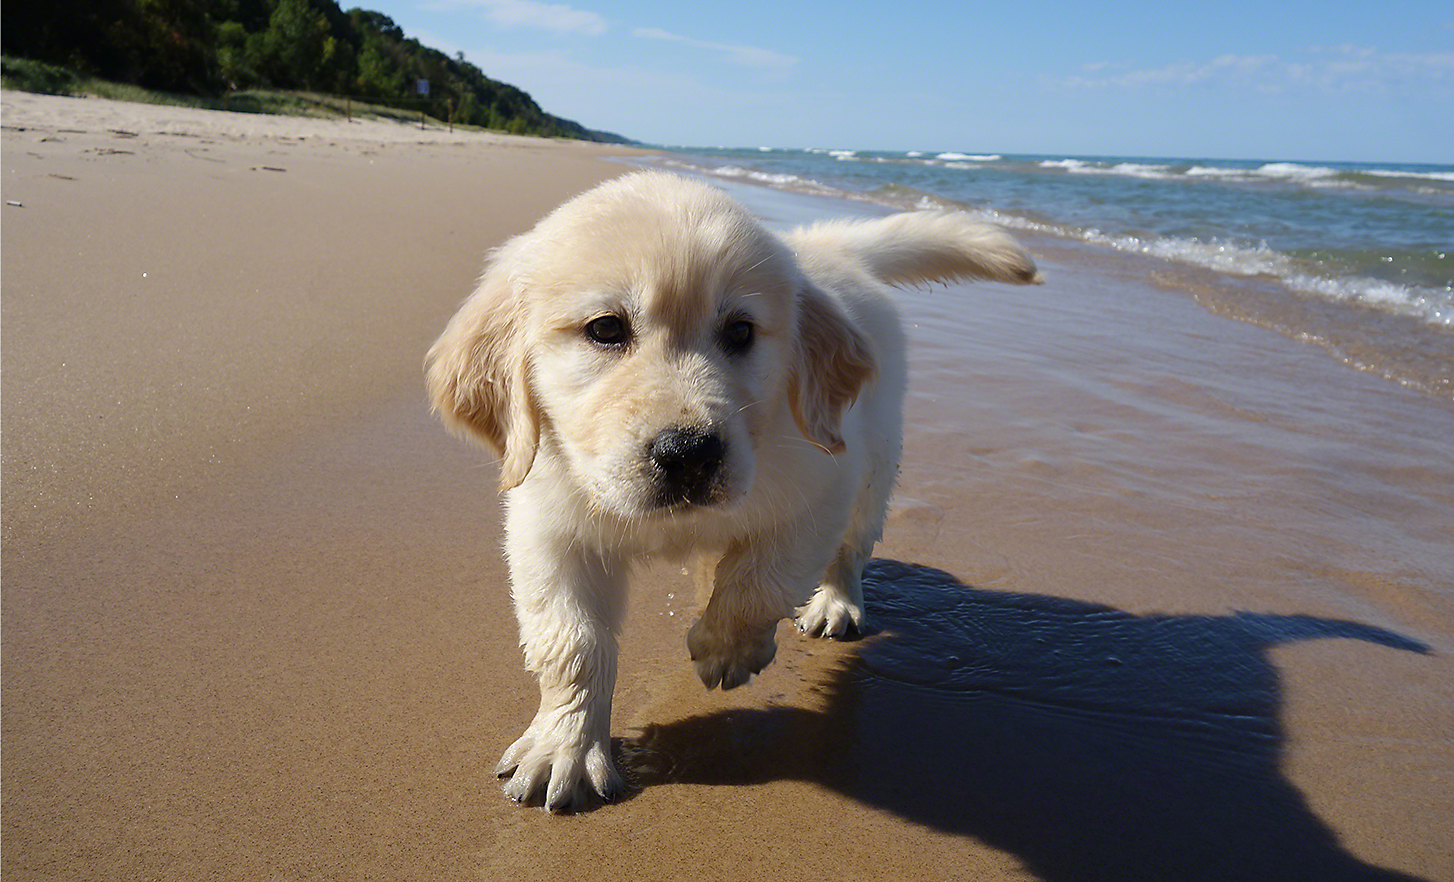 A puppy on a sandy beach